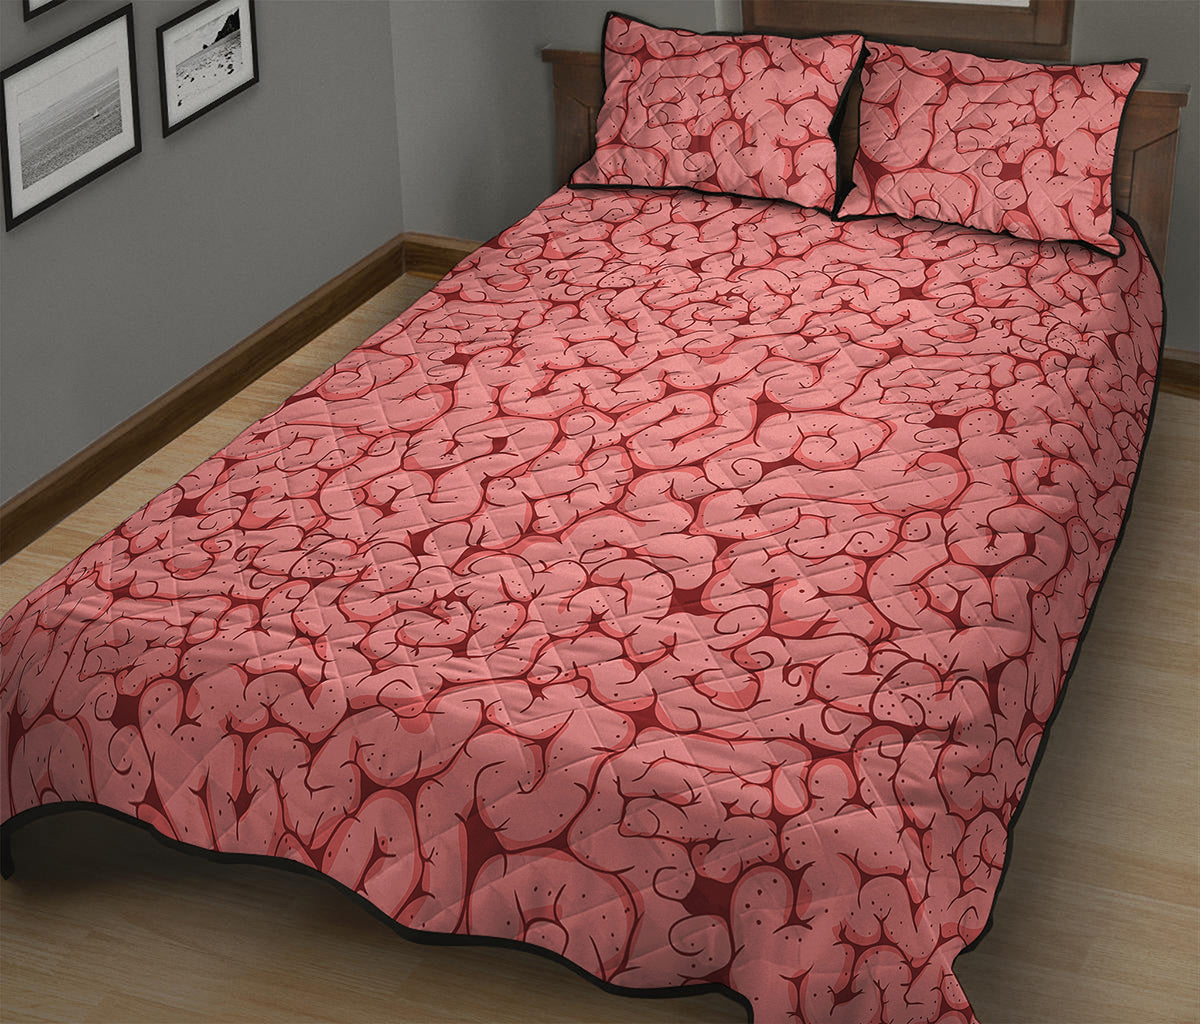 Zombie Brain Print Quilt Bed Set